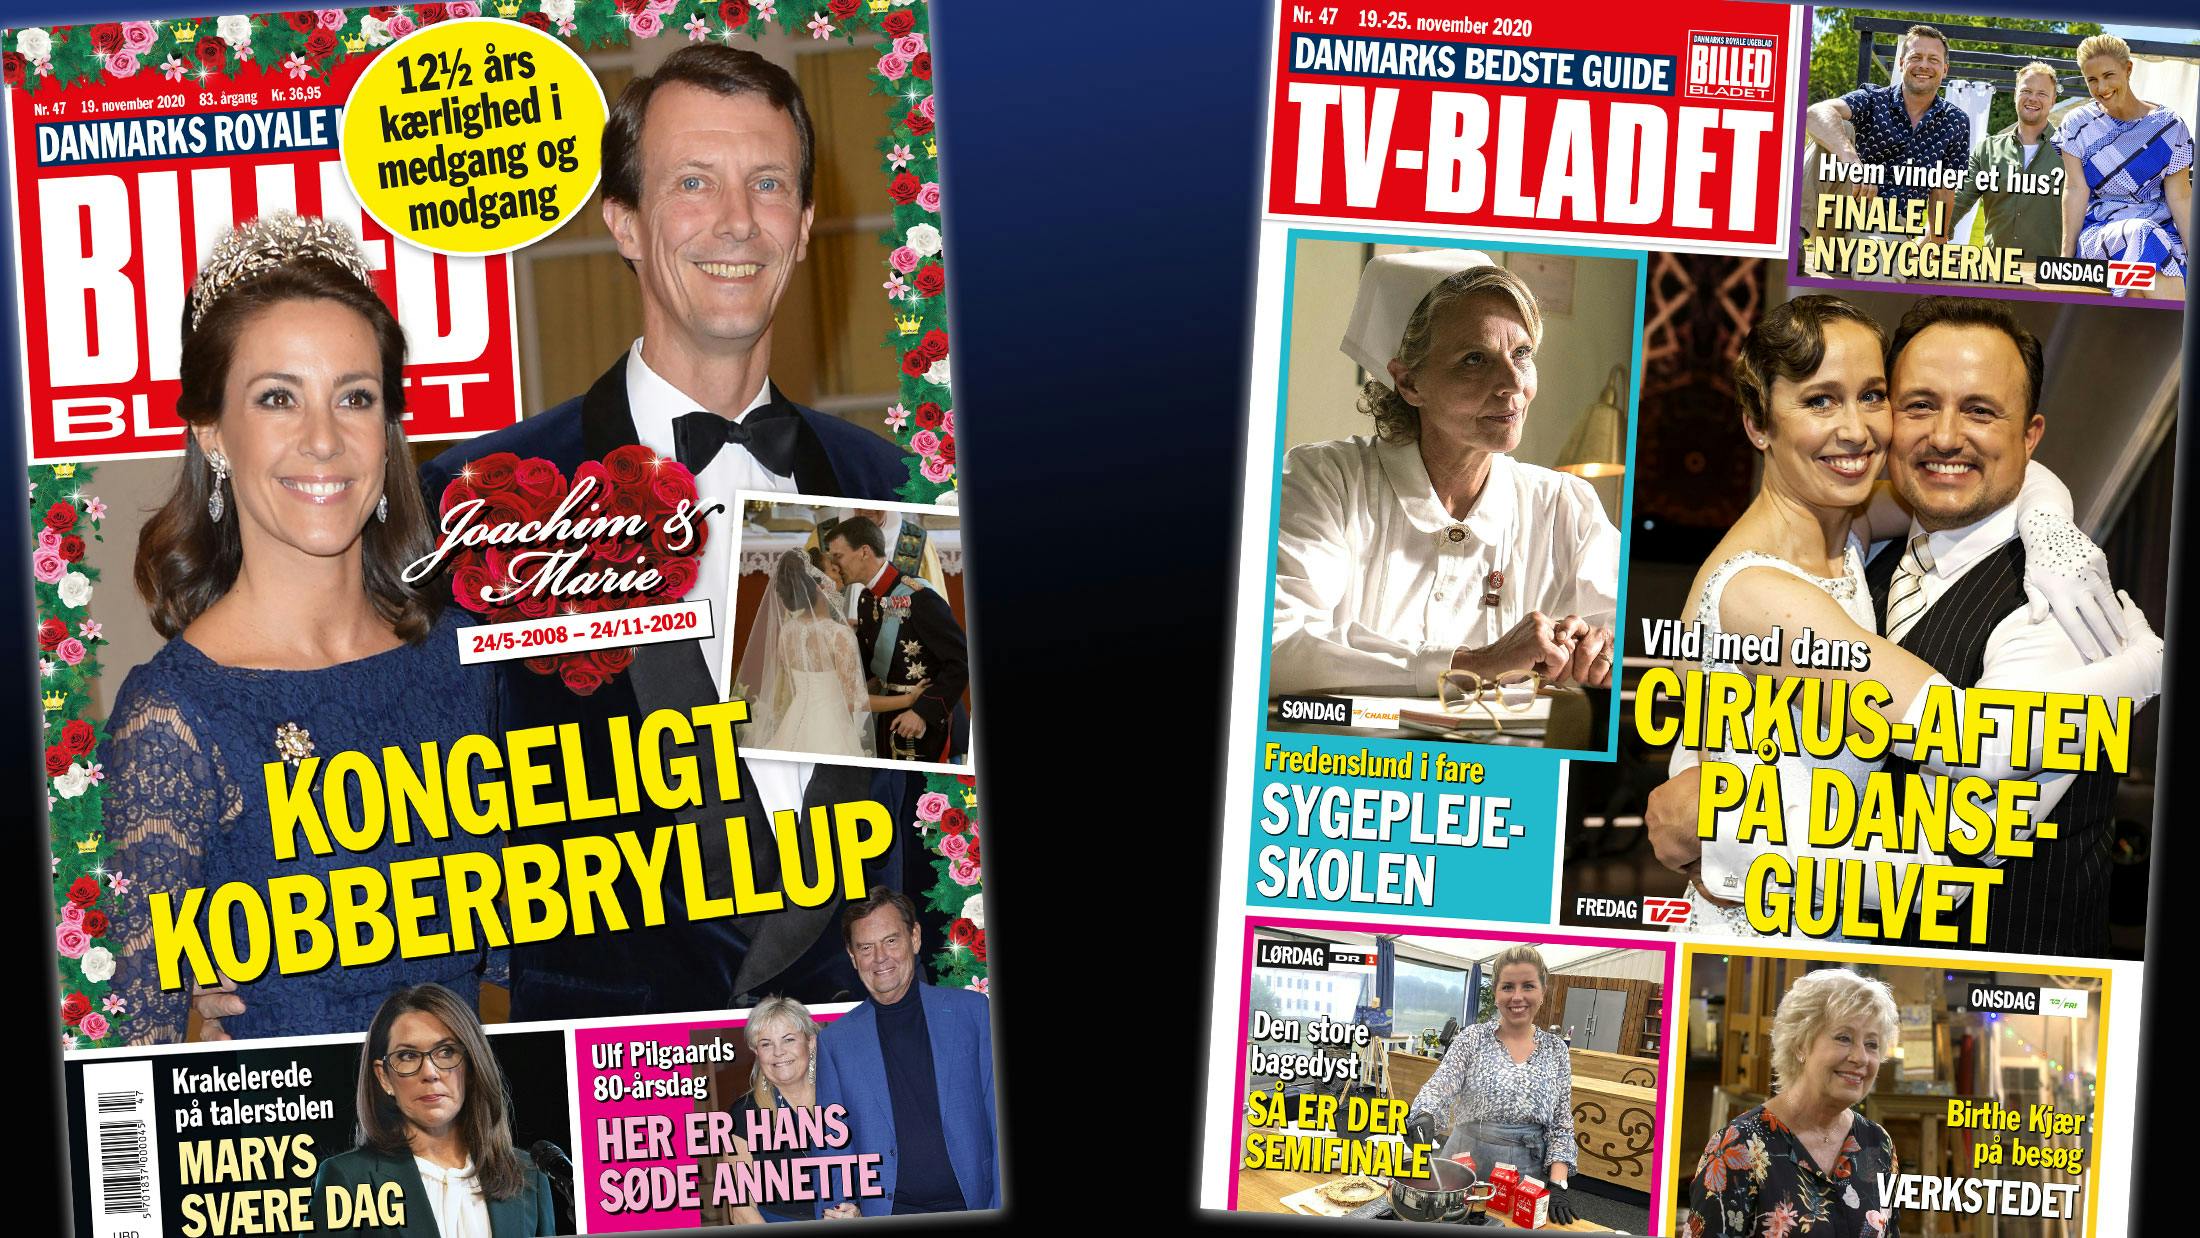 https://imgix.billedbladet.dk/media/article/webgrafik_bb47-forsider.jpg